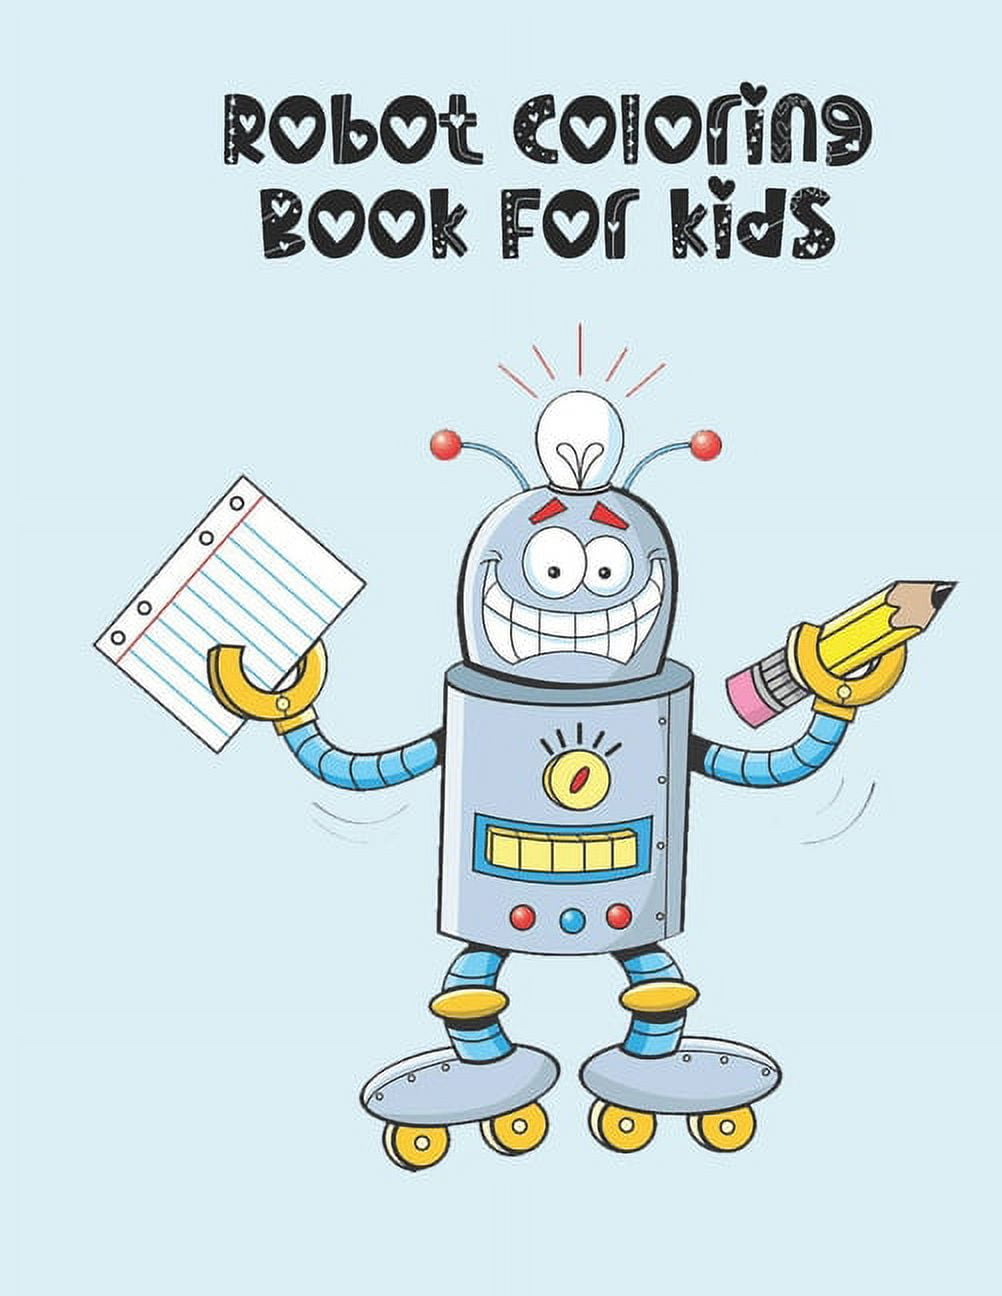 Comprar The Brilliant Coloring Book For Boys:: Robot Coloring Book for Kids  (A Really Best Relaxing Colourin De Coloring Books for Boys - Buscalibre